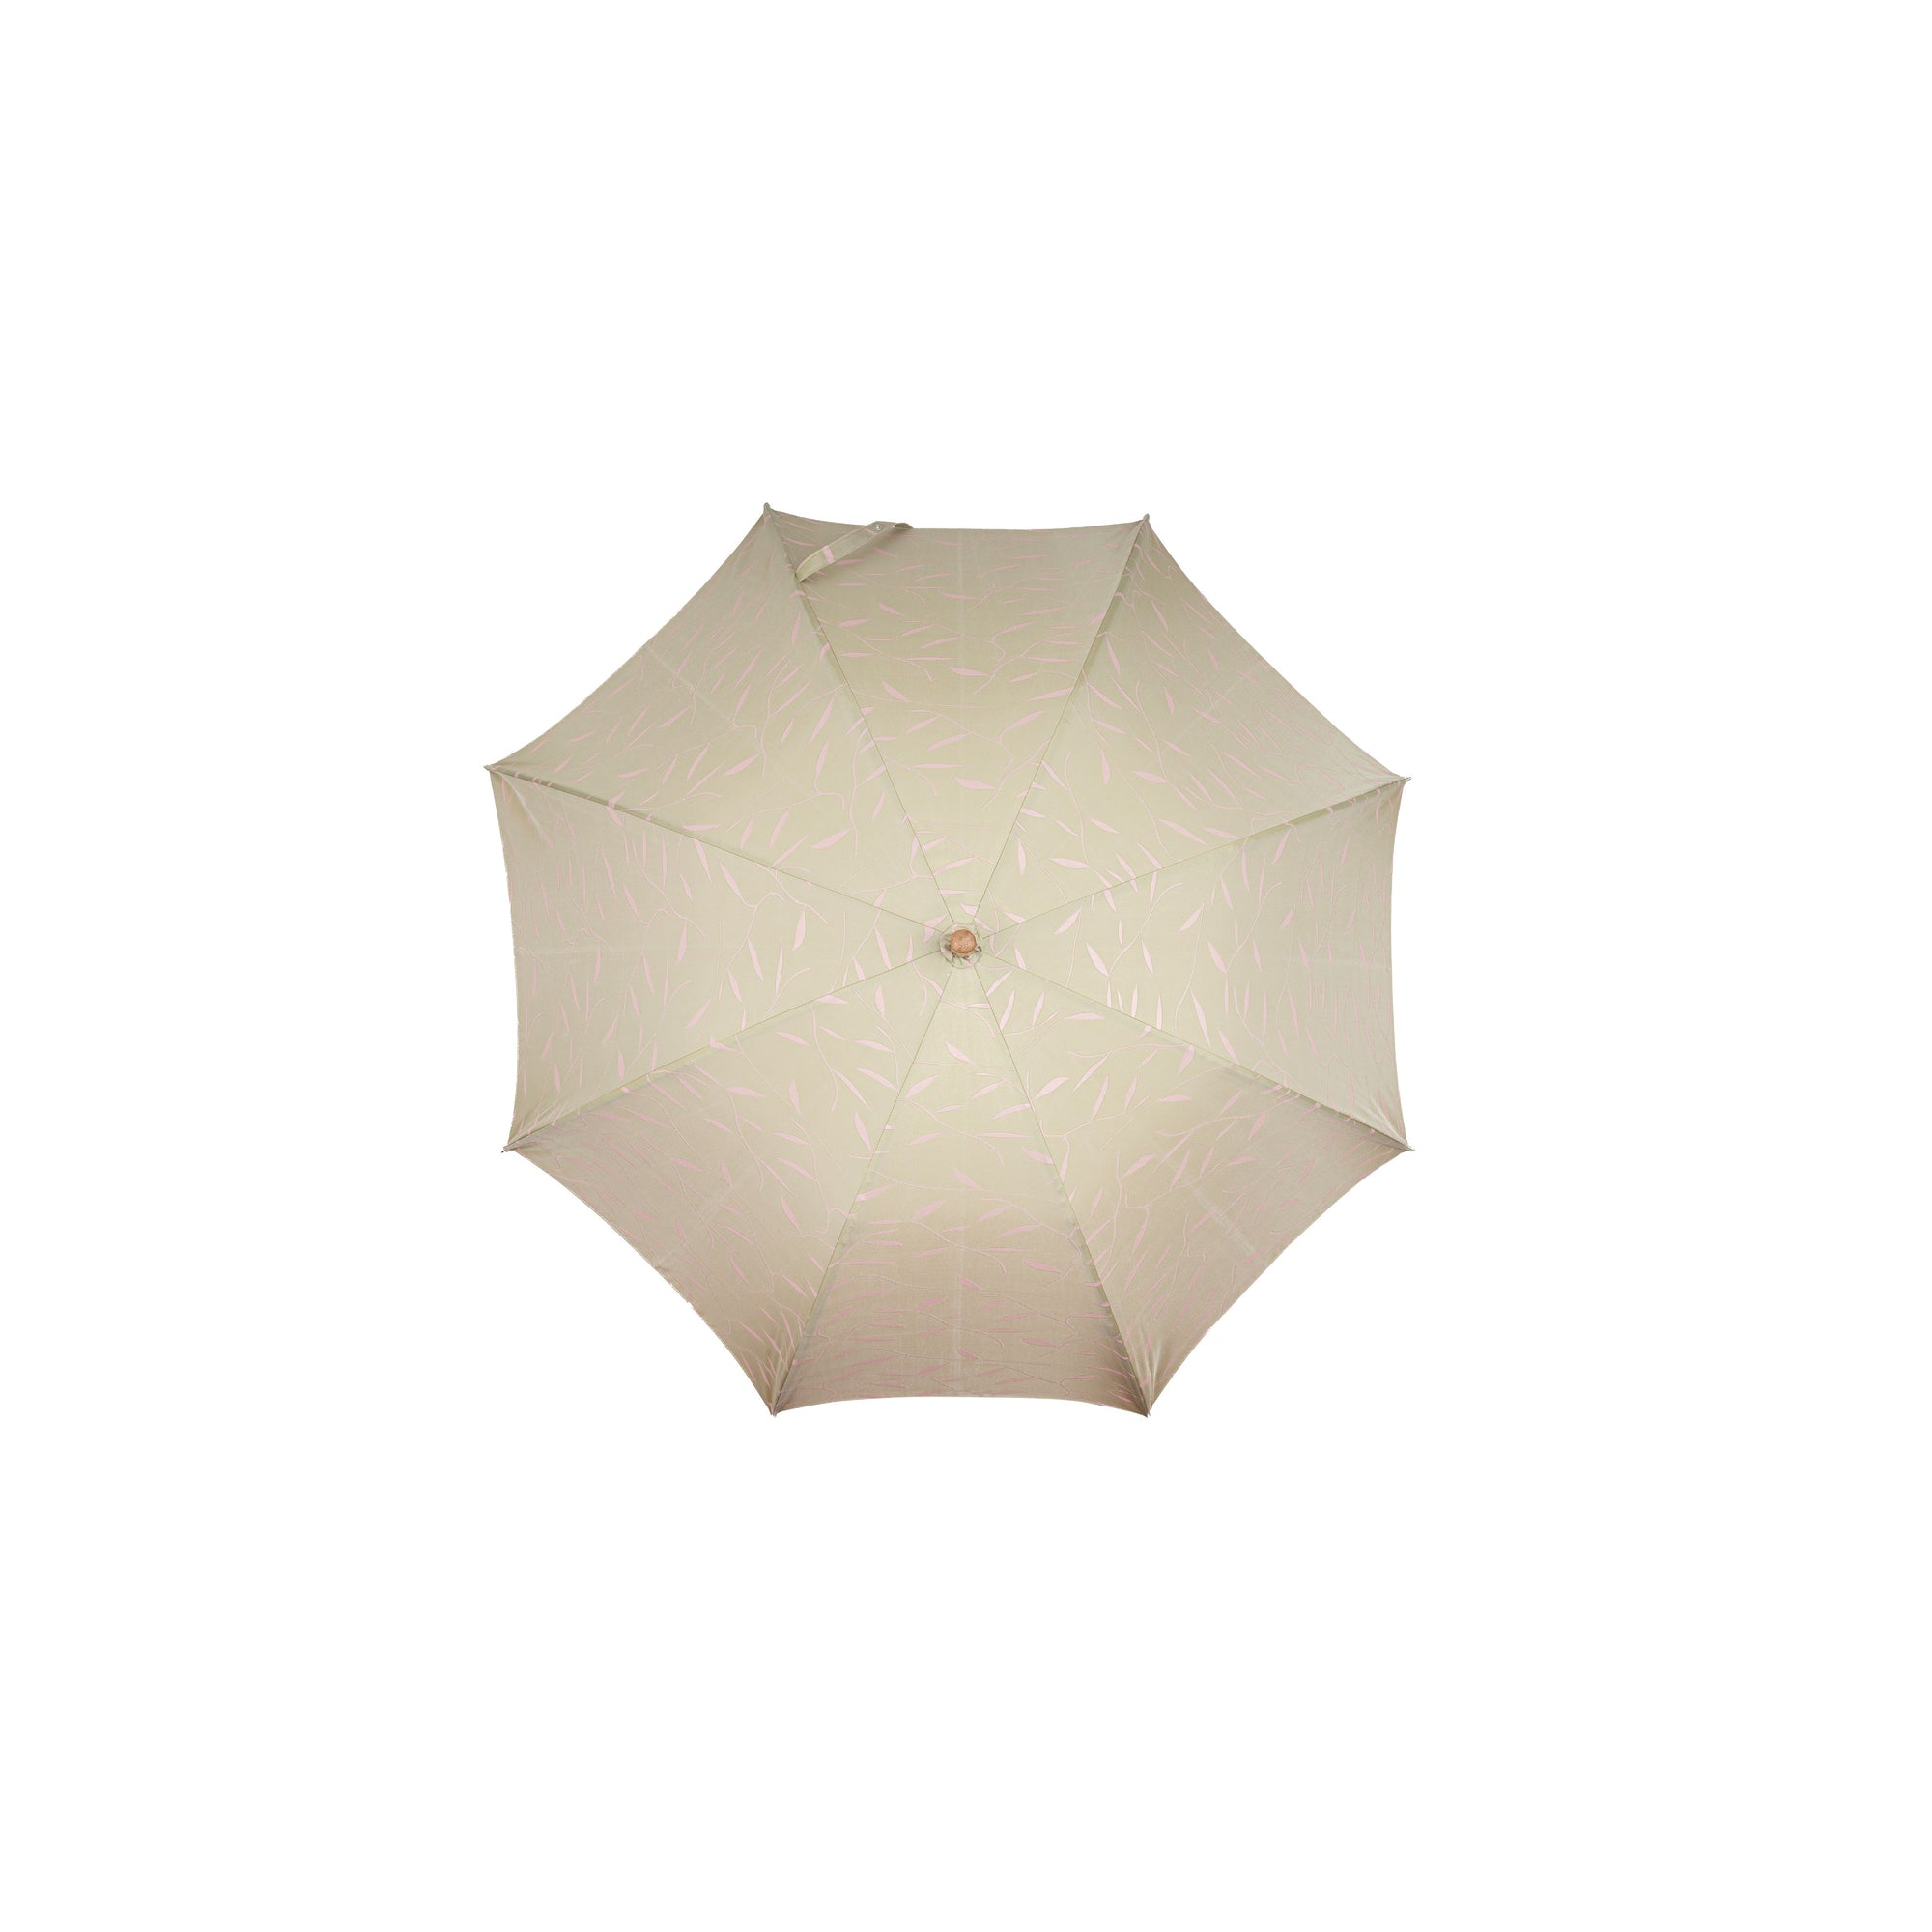 Tampus Umbrella with Malacca Handle